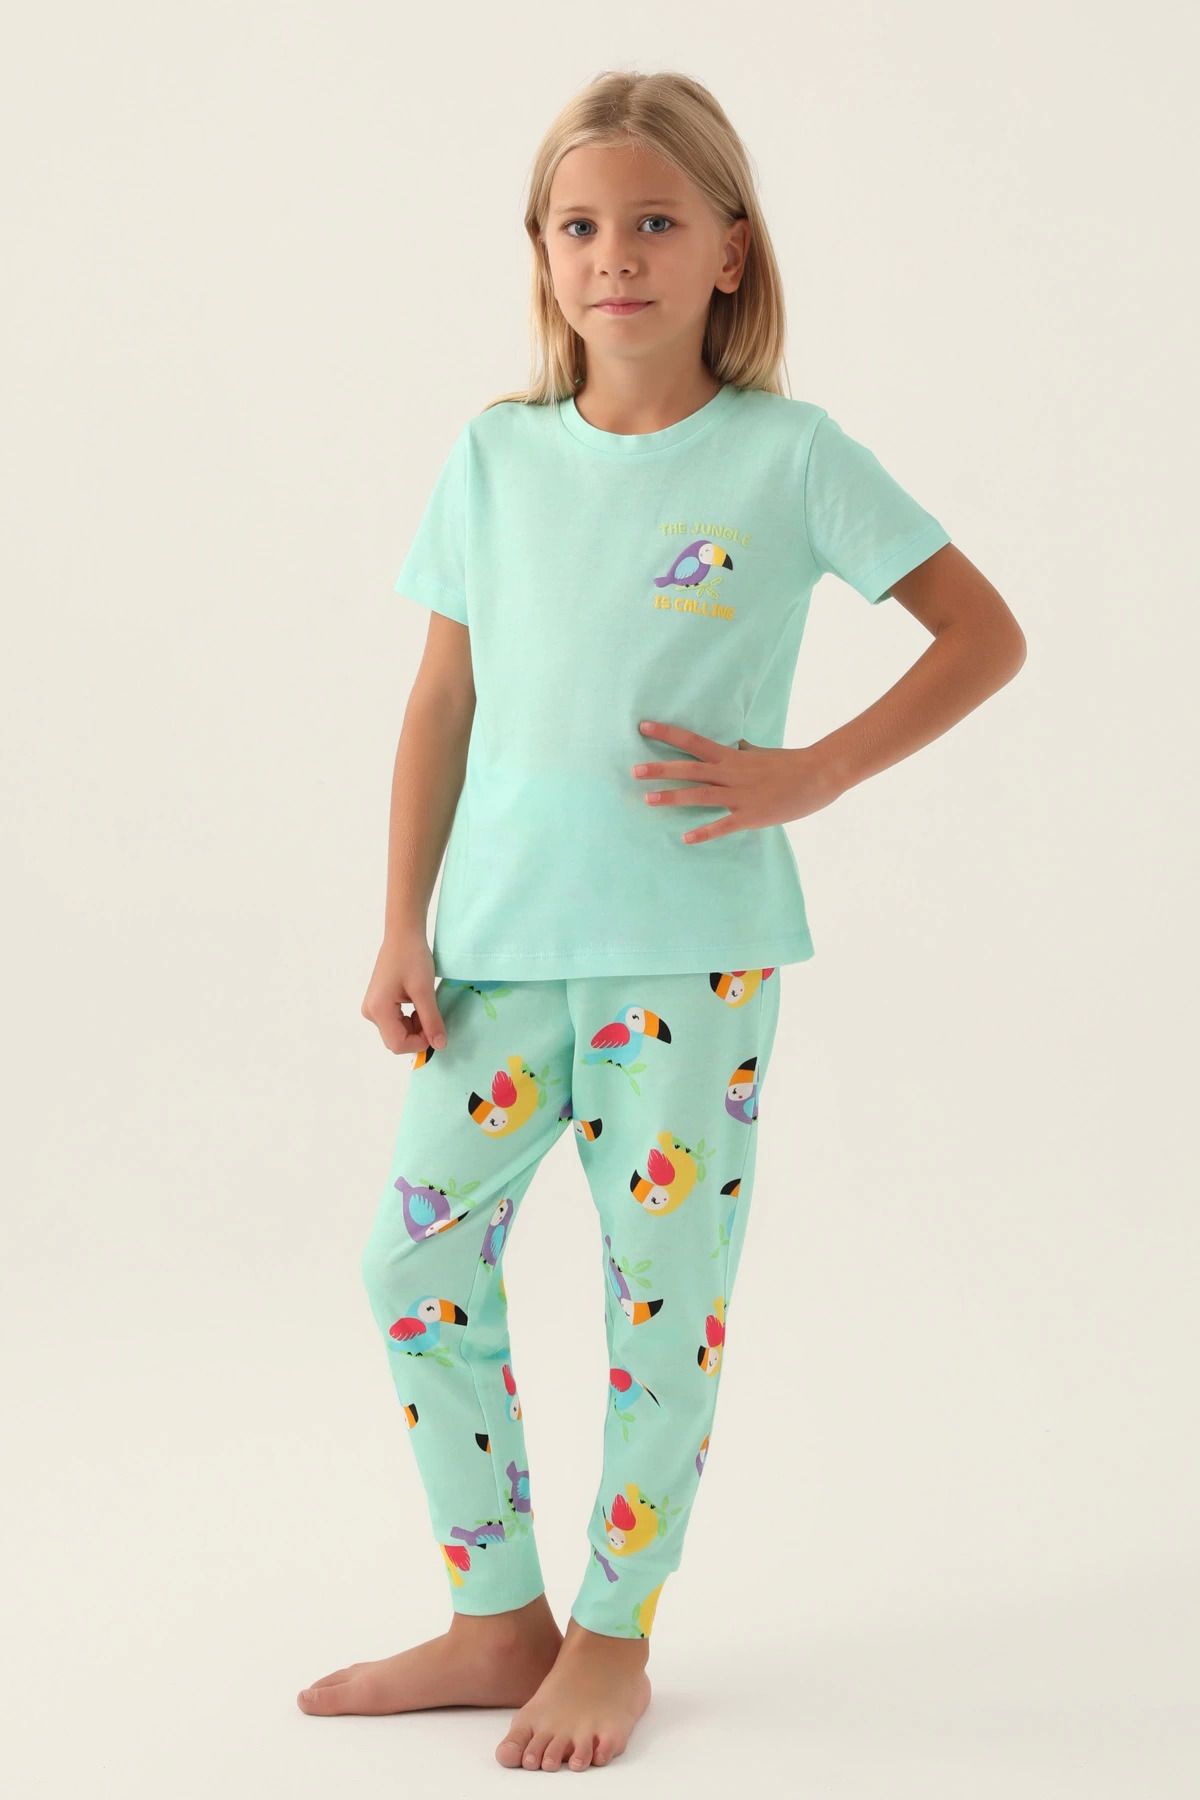 Pierre Cardin Roly Poly 3403-g Kız Çocuk Kısa Kol Pijama Takımı